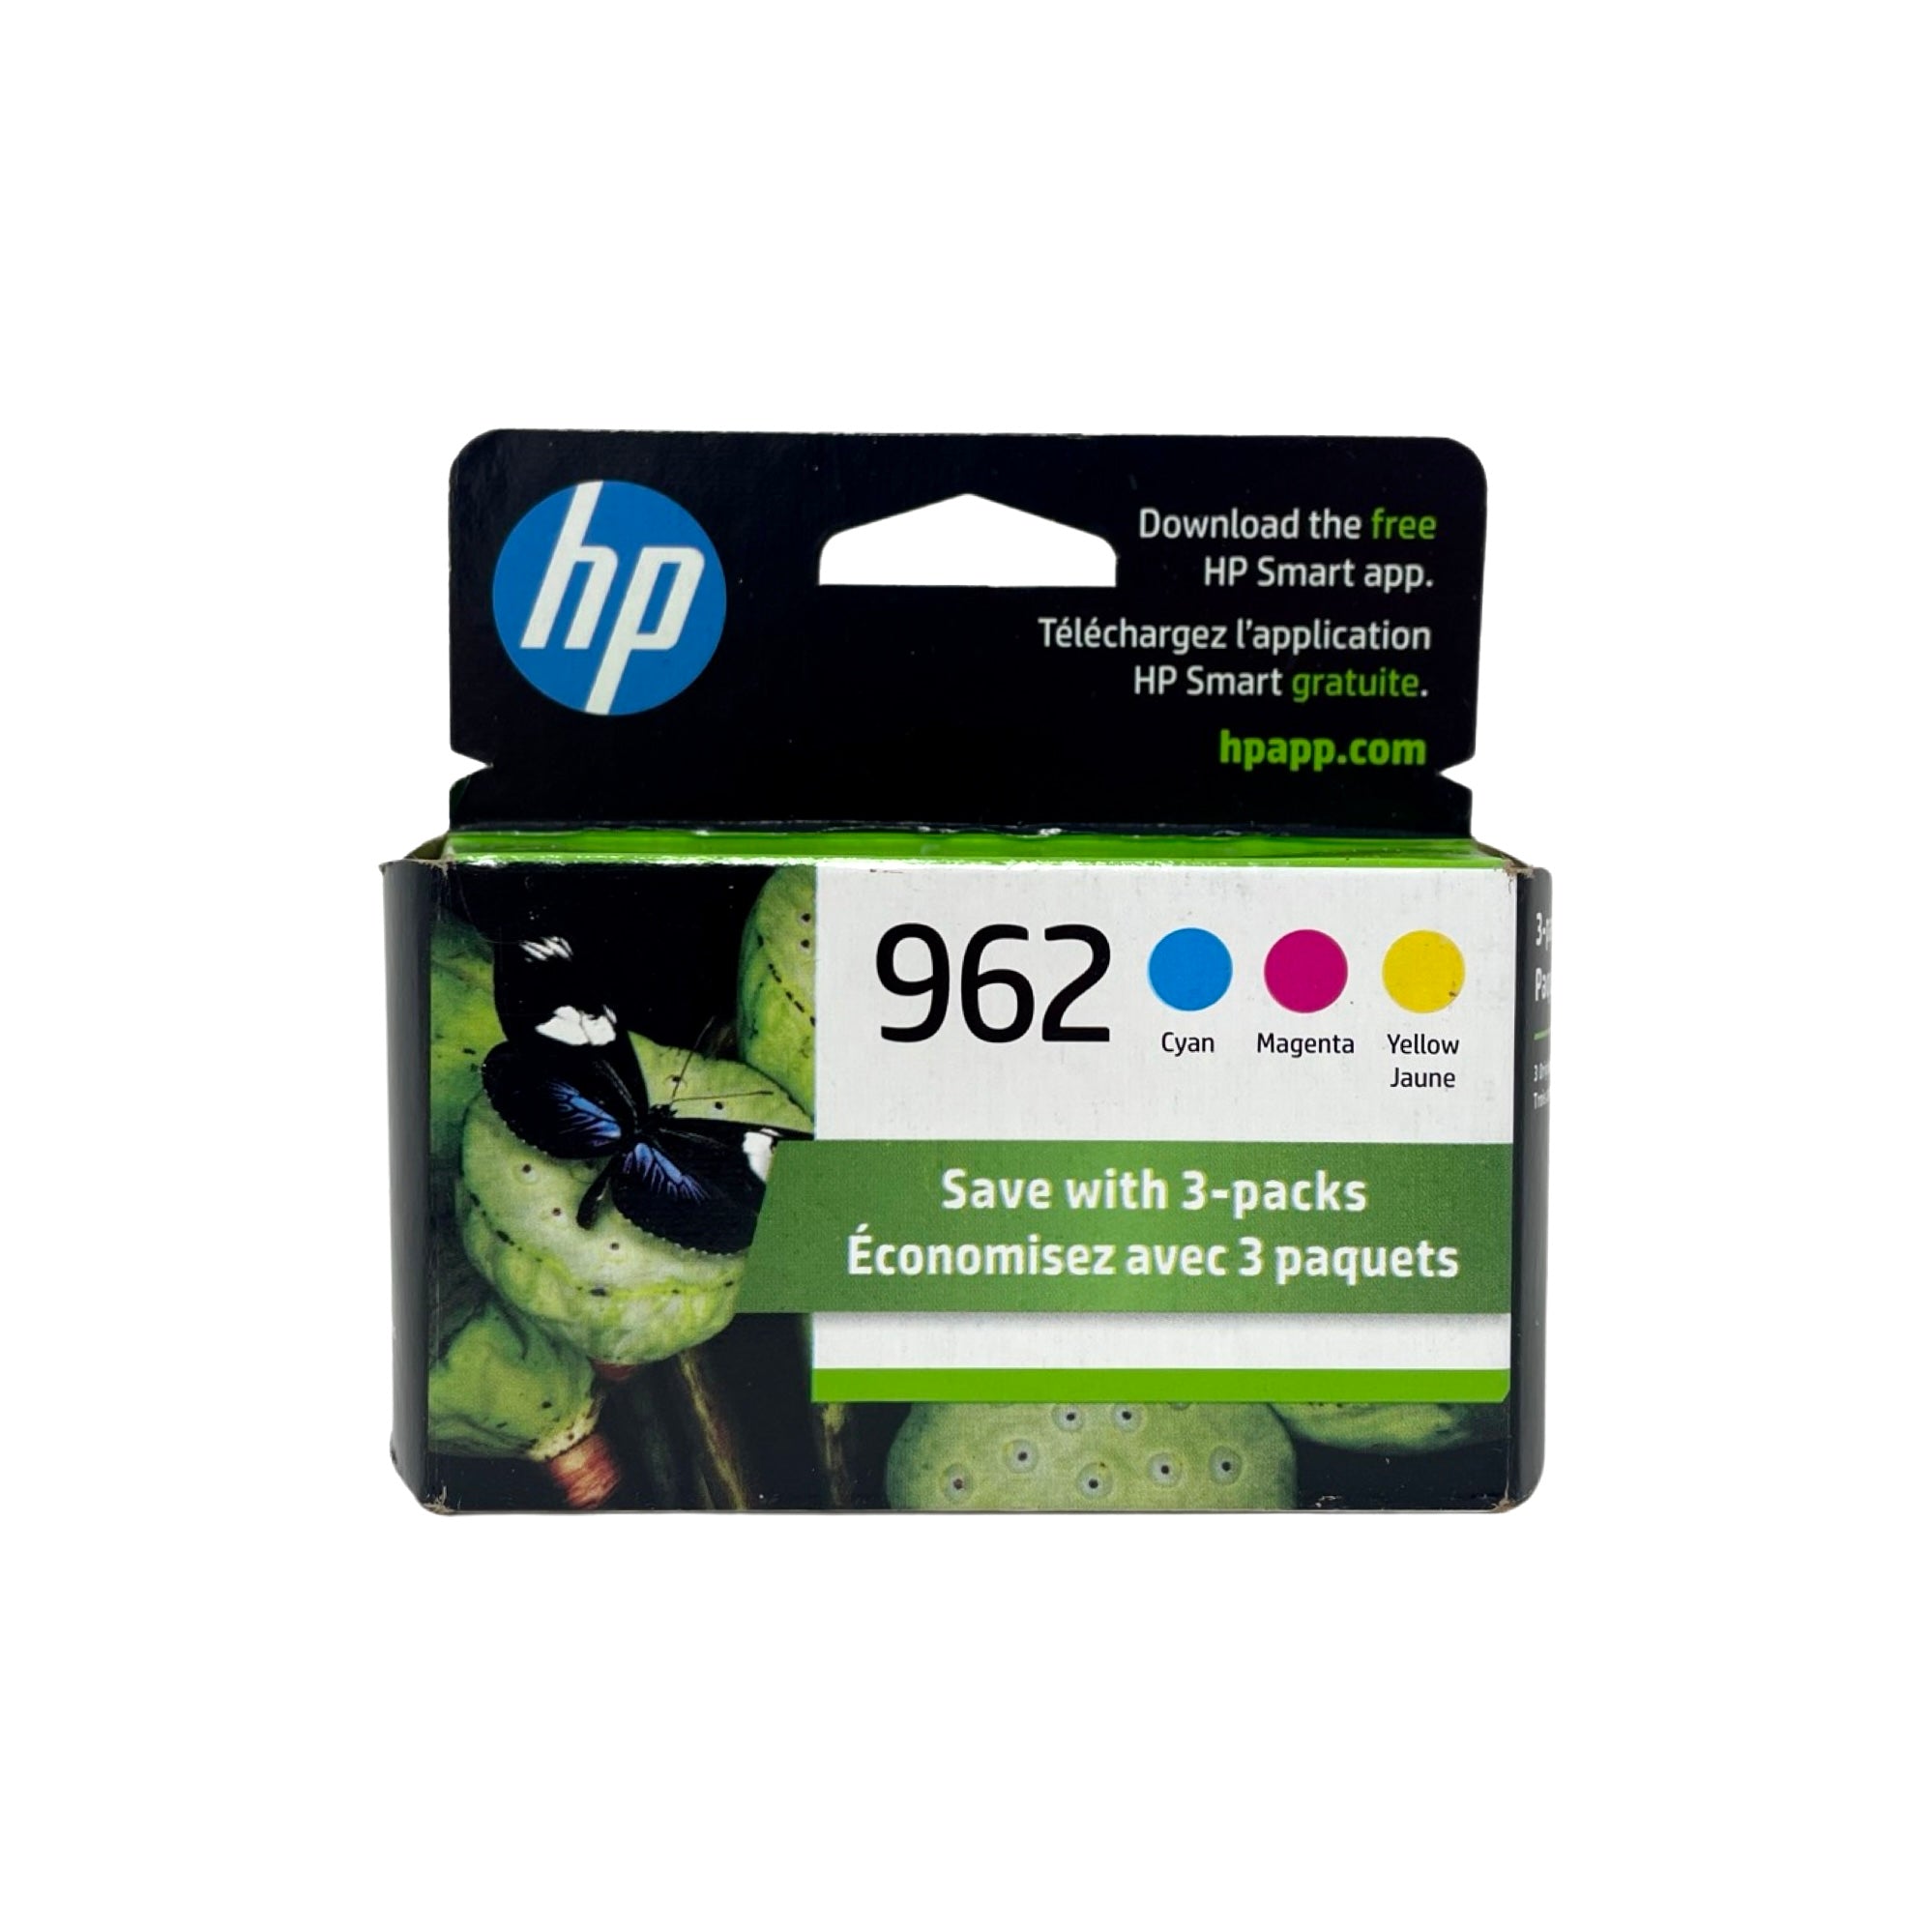 HP 962 Ink 3 pack - Cyan Magenta Yellow- Original HP Ink Cartridges (3YP00AN)